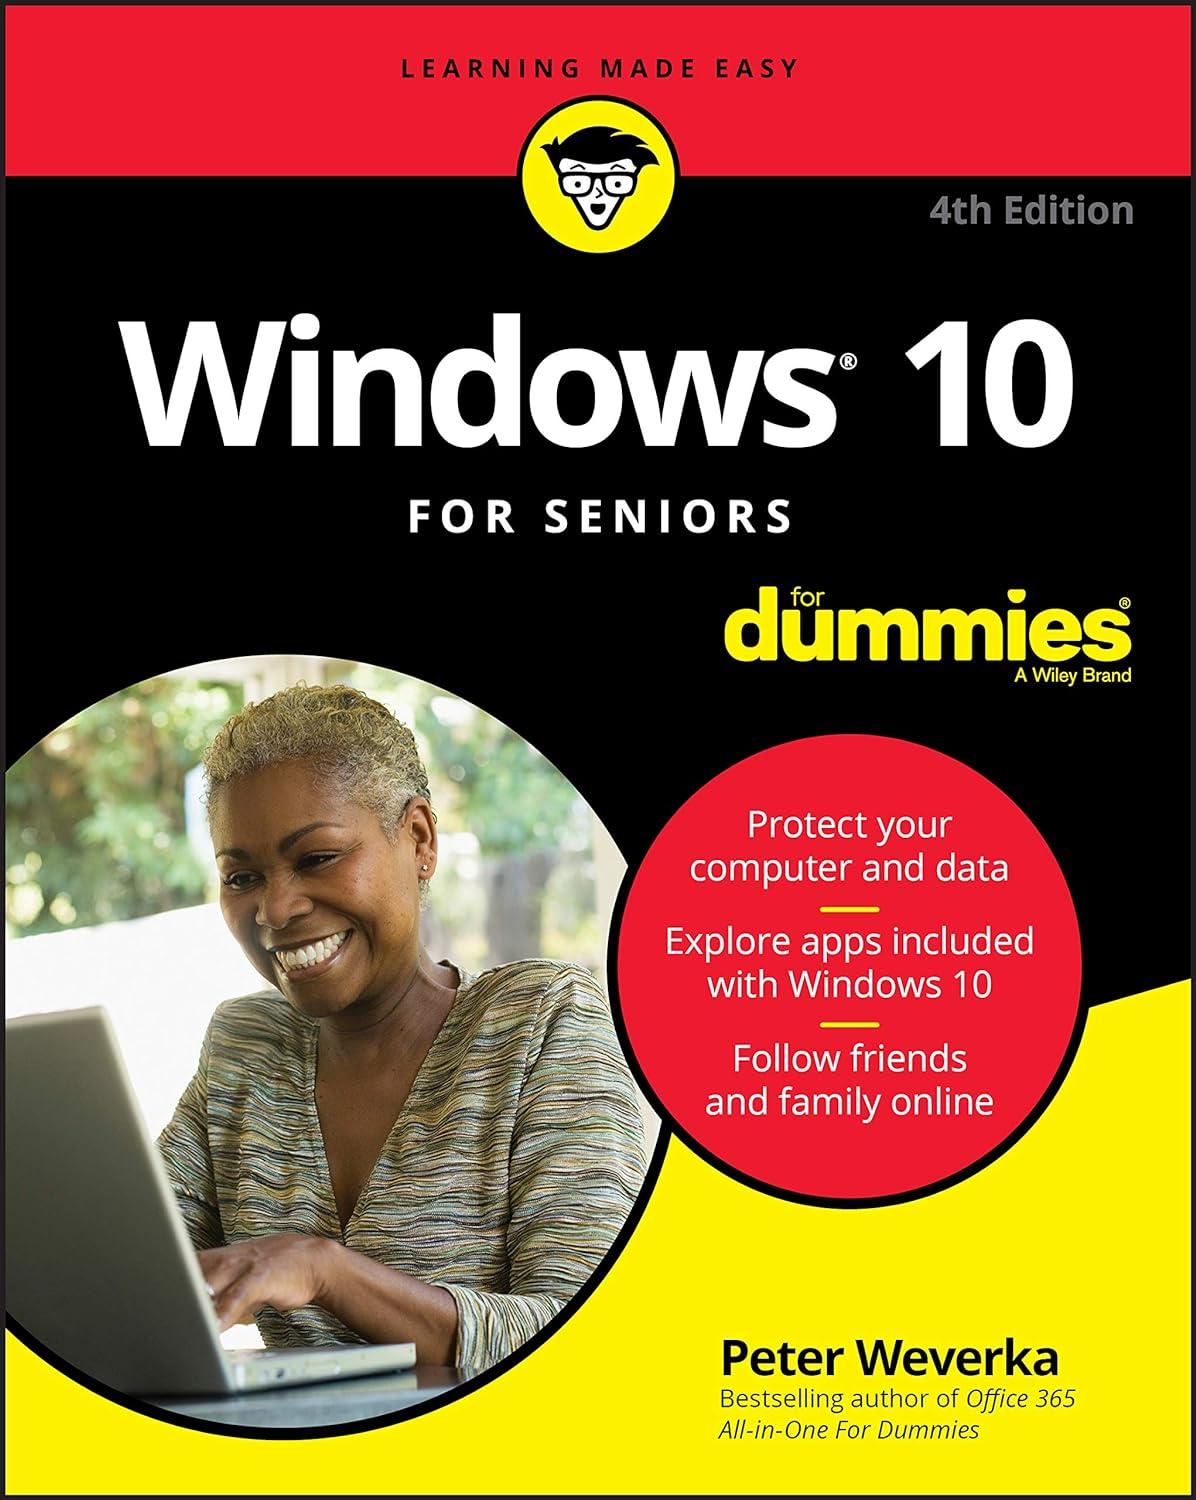 windows 10 for seniors for dummies 4th edition peter weverka 1119680549, 978-1119680543